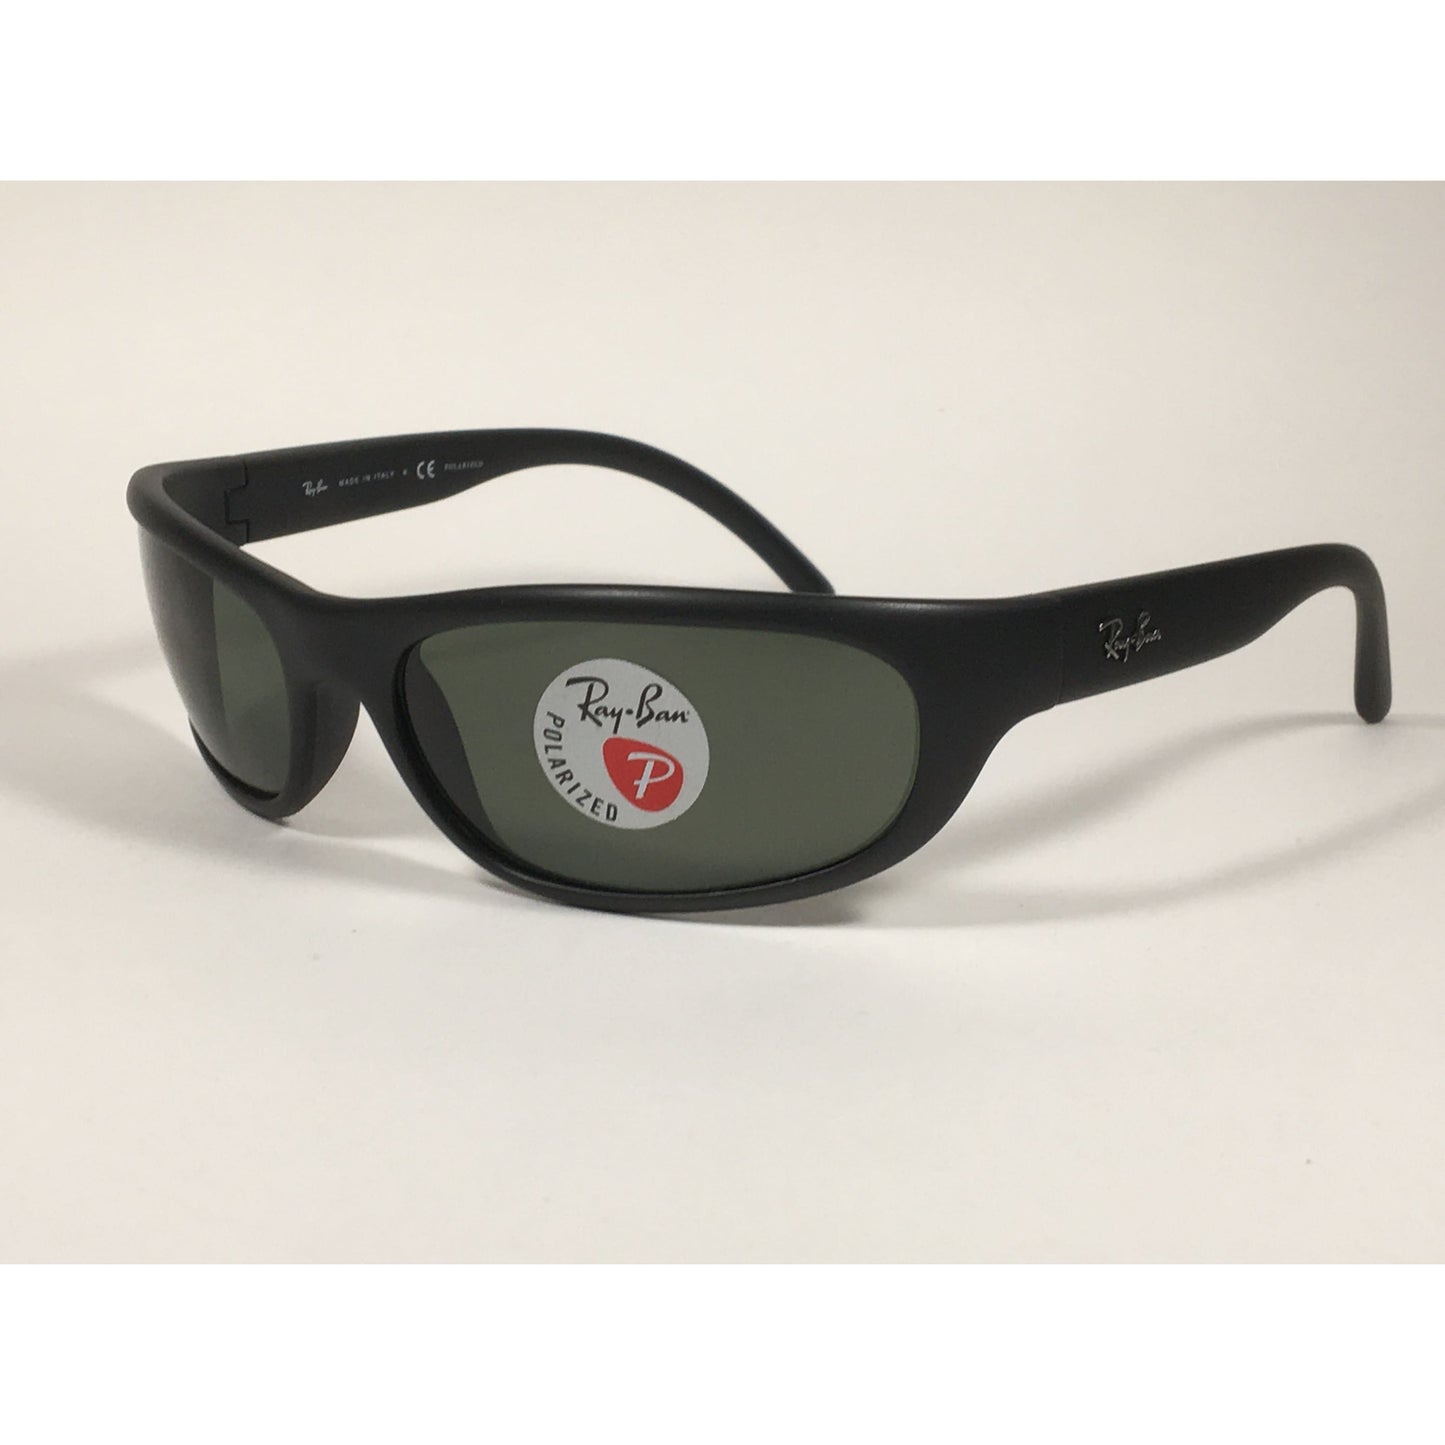 Ray-Ban Predator Polarized Sunglasses Matte Black Green Lens RB4033 601-S/48 - Sunglasses